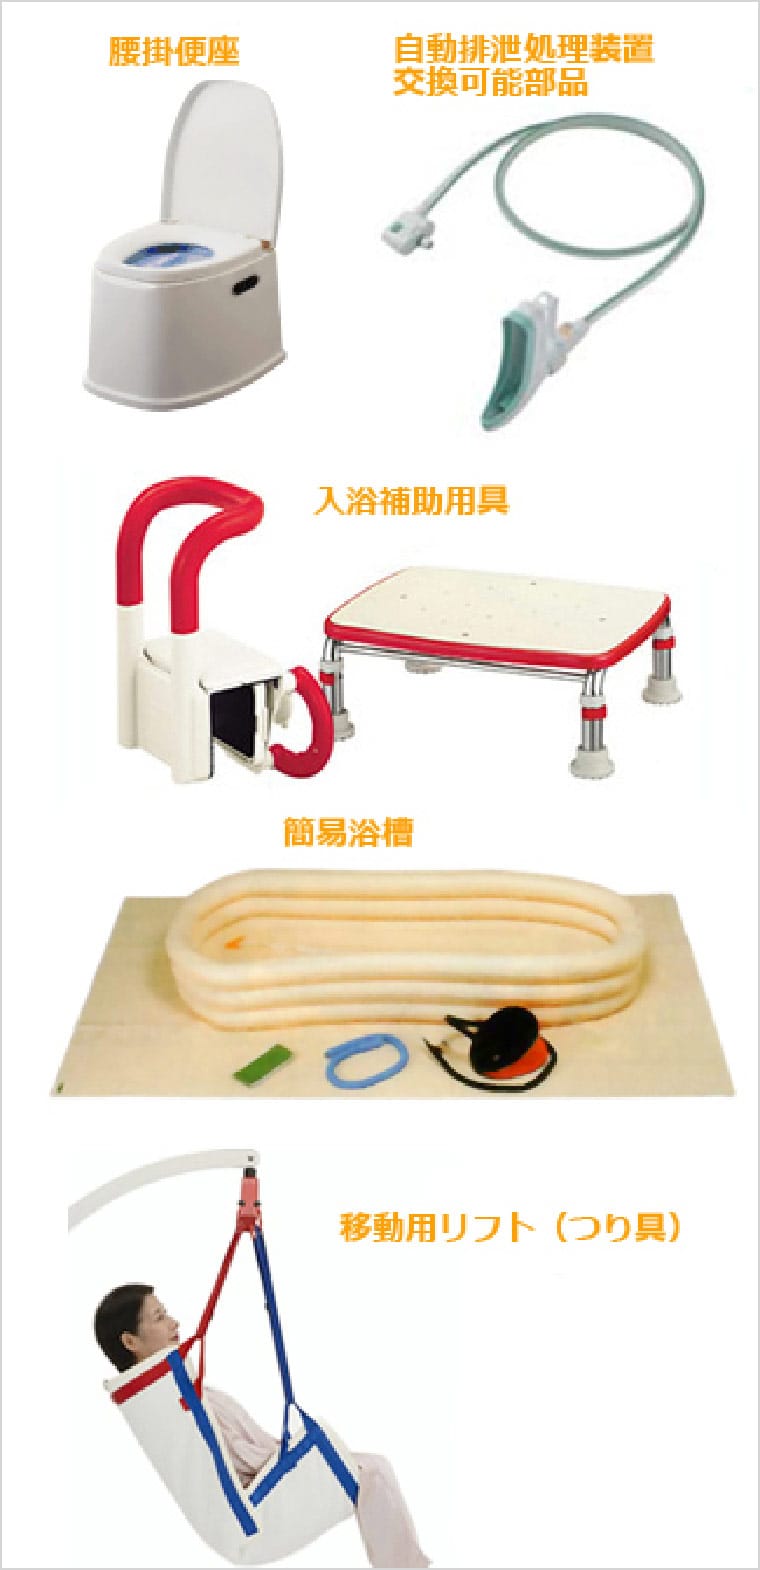 腰掛便座、自動排泄処理装置、入浴補助用具、簡易浴槽、移動用リフト（つり具）の例